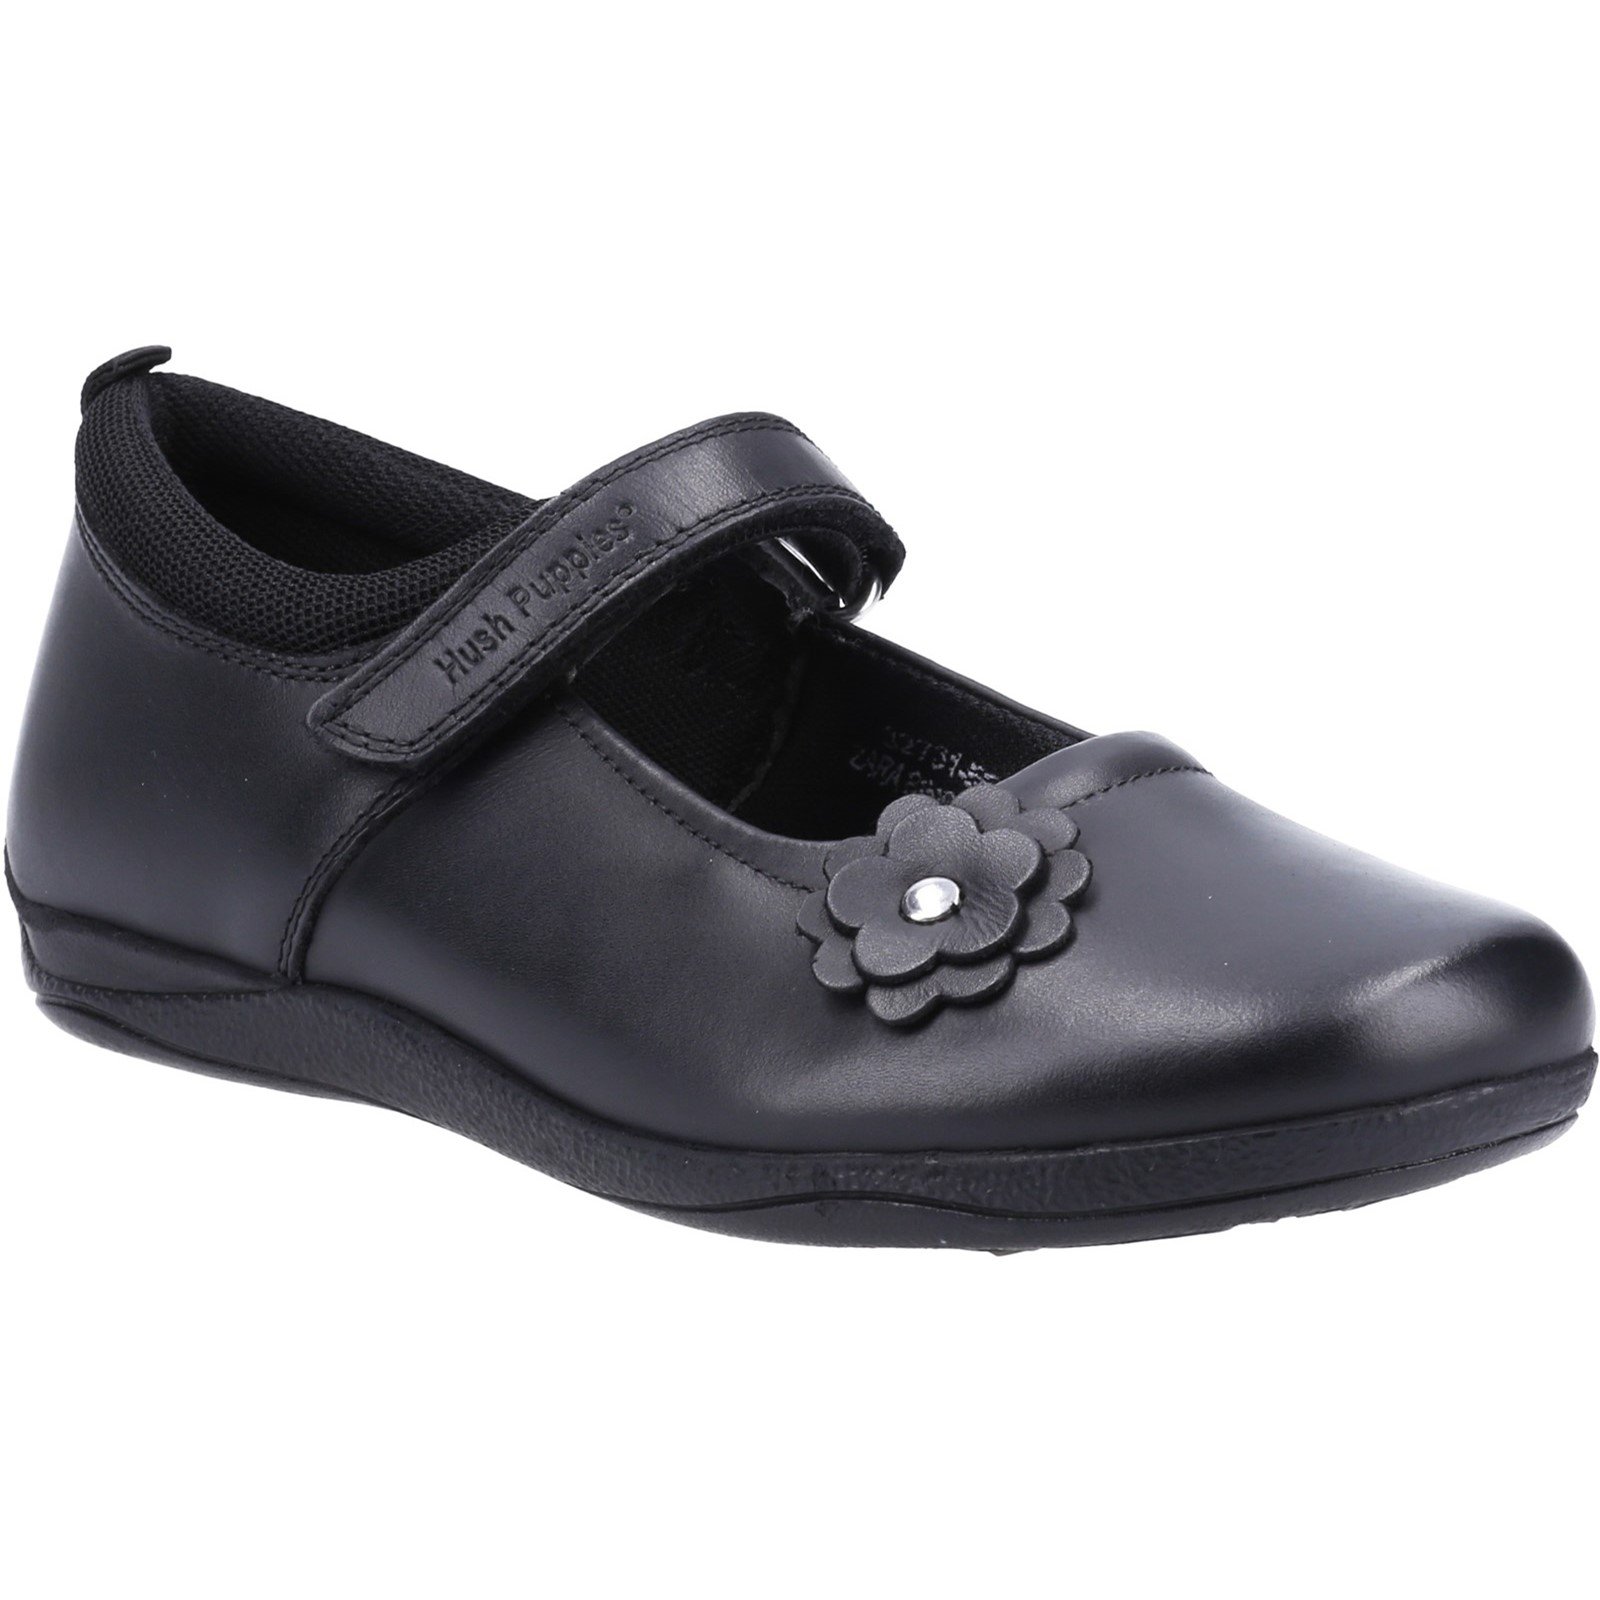 Hush Puppies Kid's Zara Junior School Flat Shoe Black 32731 - Black 13